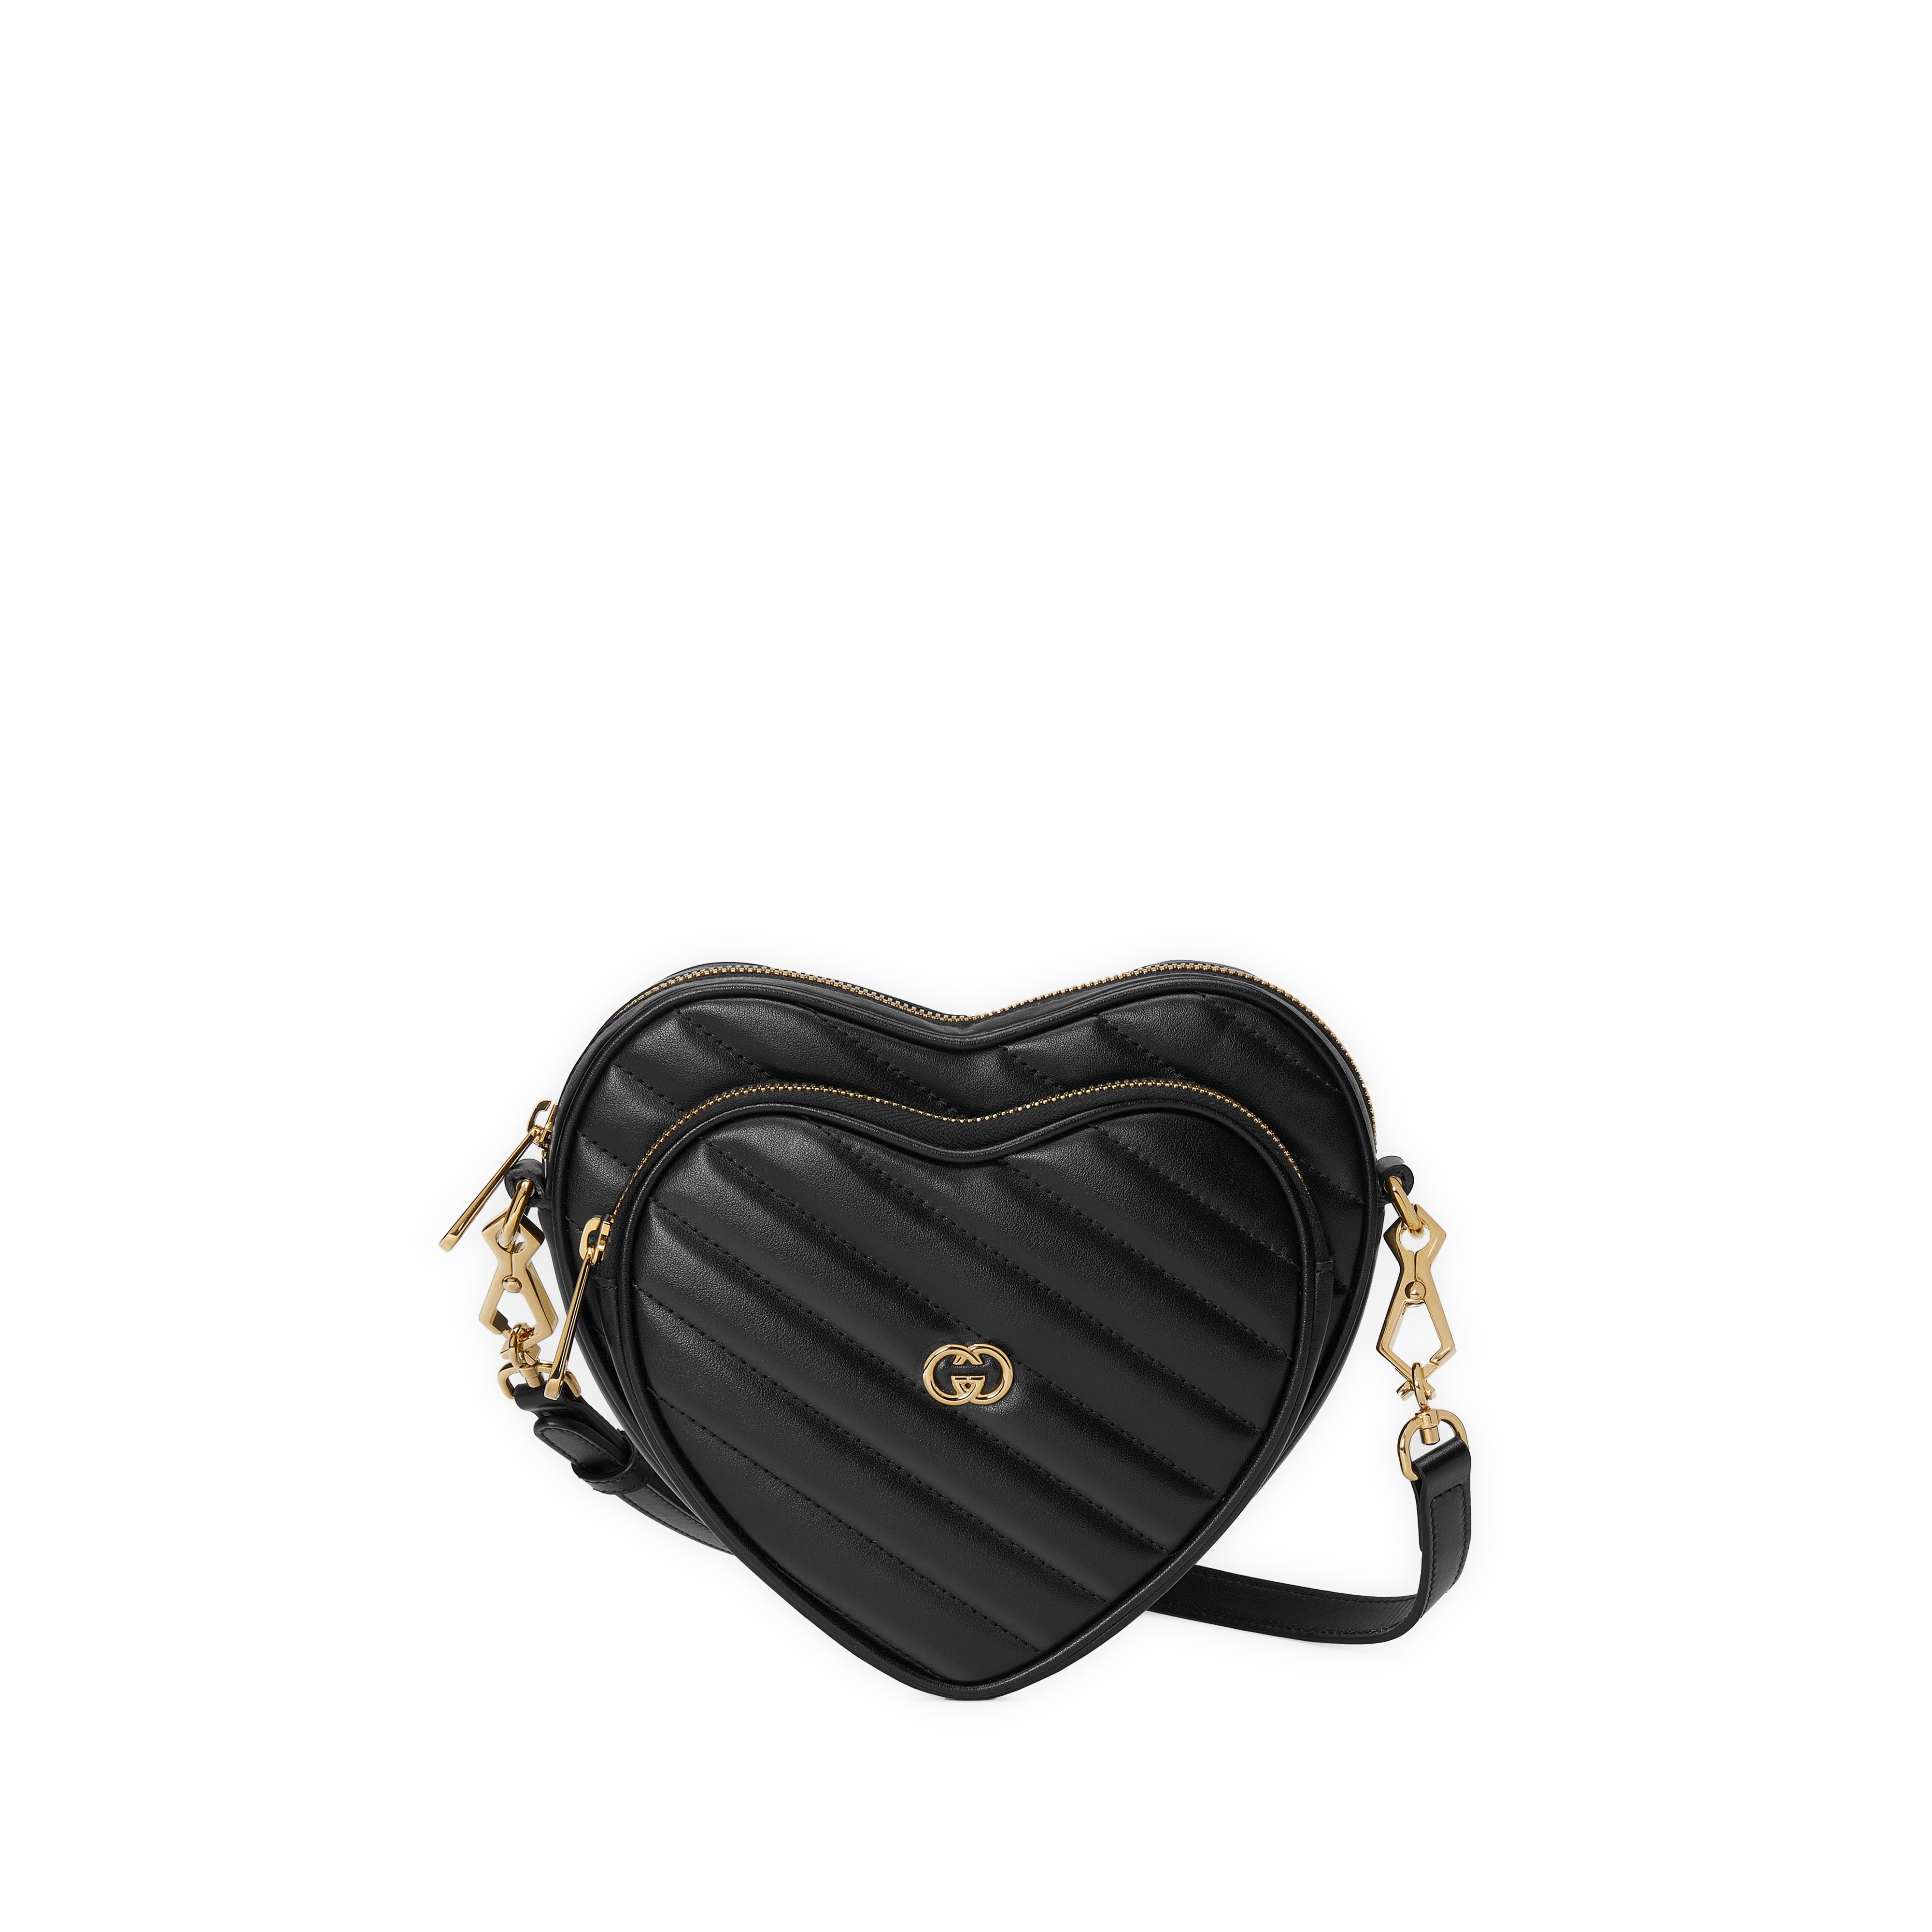 Interlocking G mini heart shoulder bag in black leather